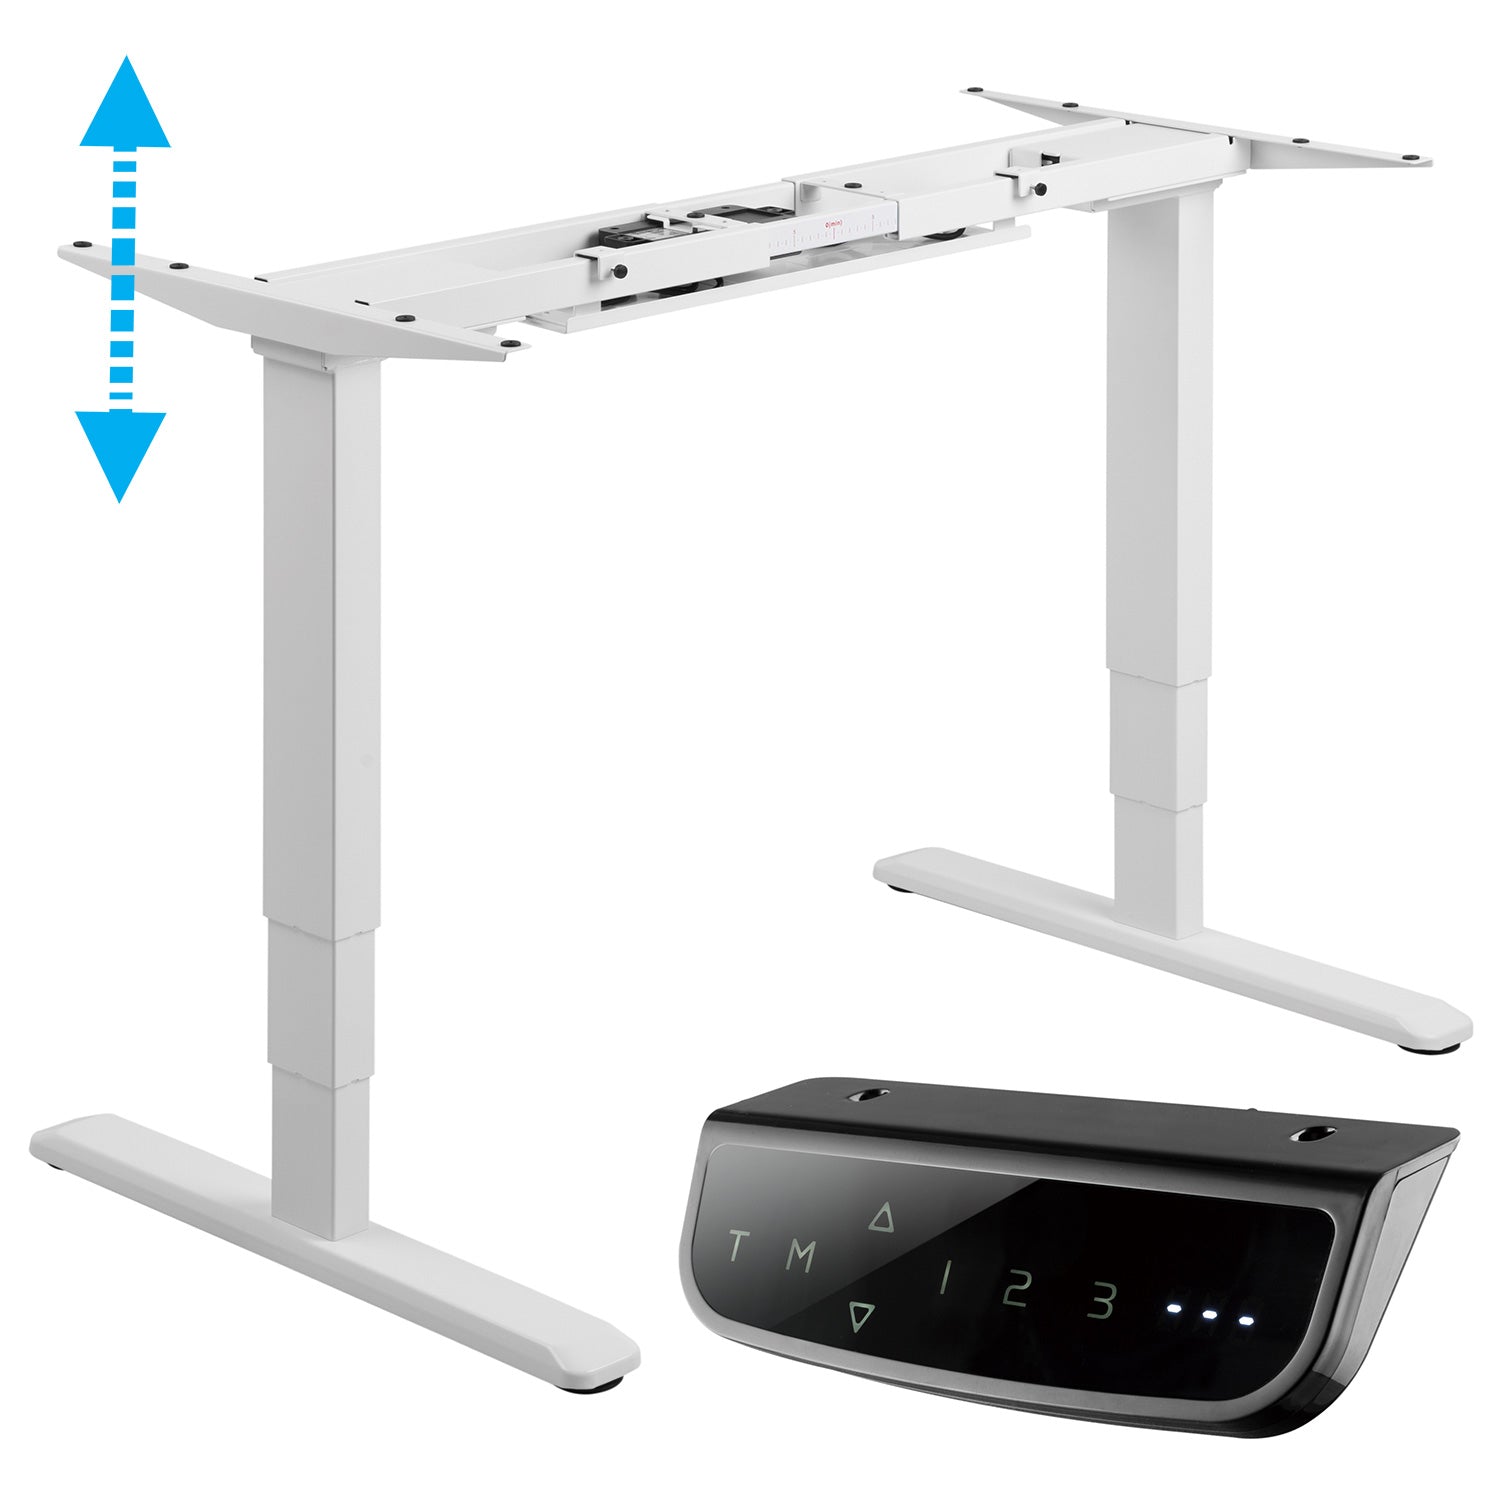 Order Office Furniture Dual Motor Electric Desk Frame Only - Black, Silver or White Option - OOF12